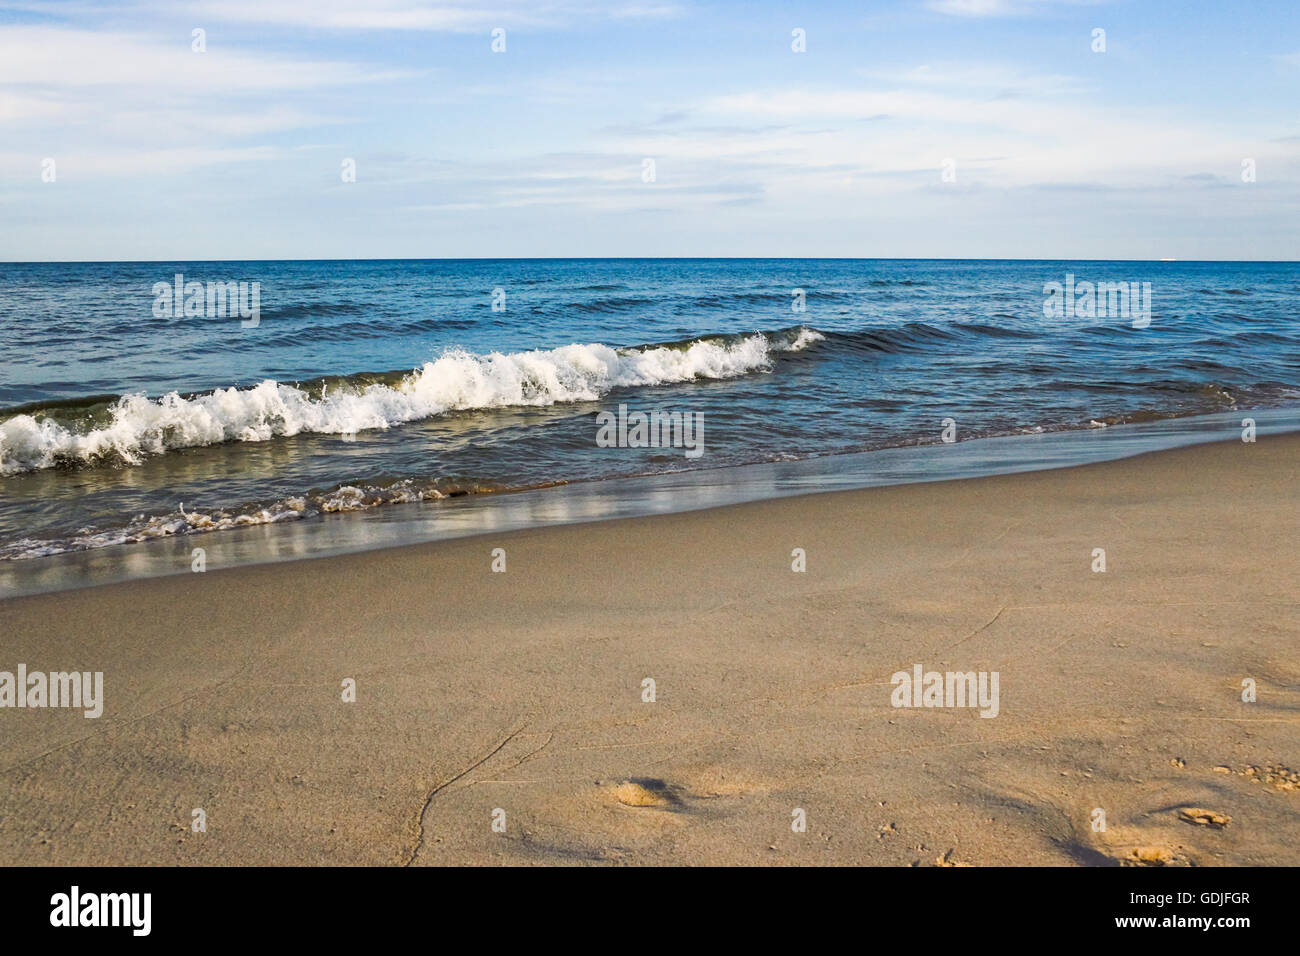 Sea beach and waves Stock Photo